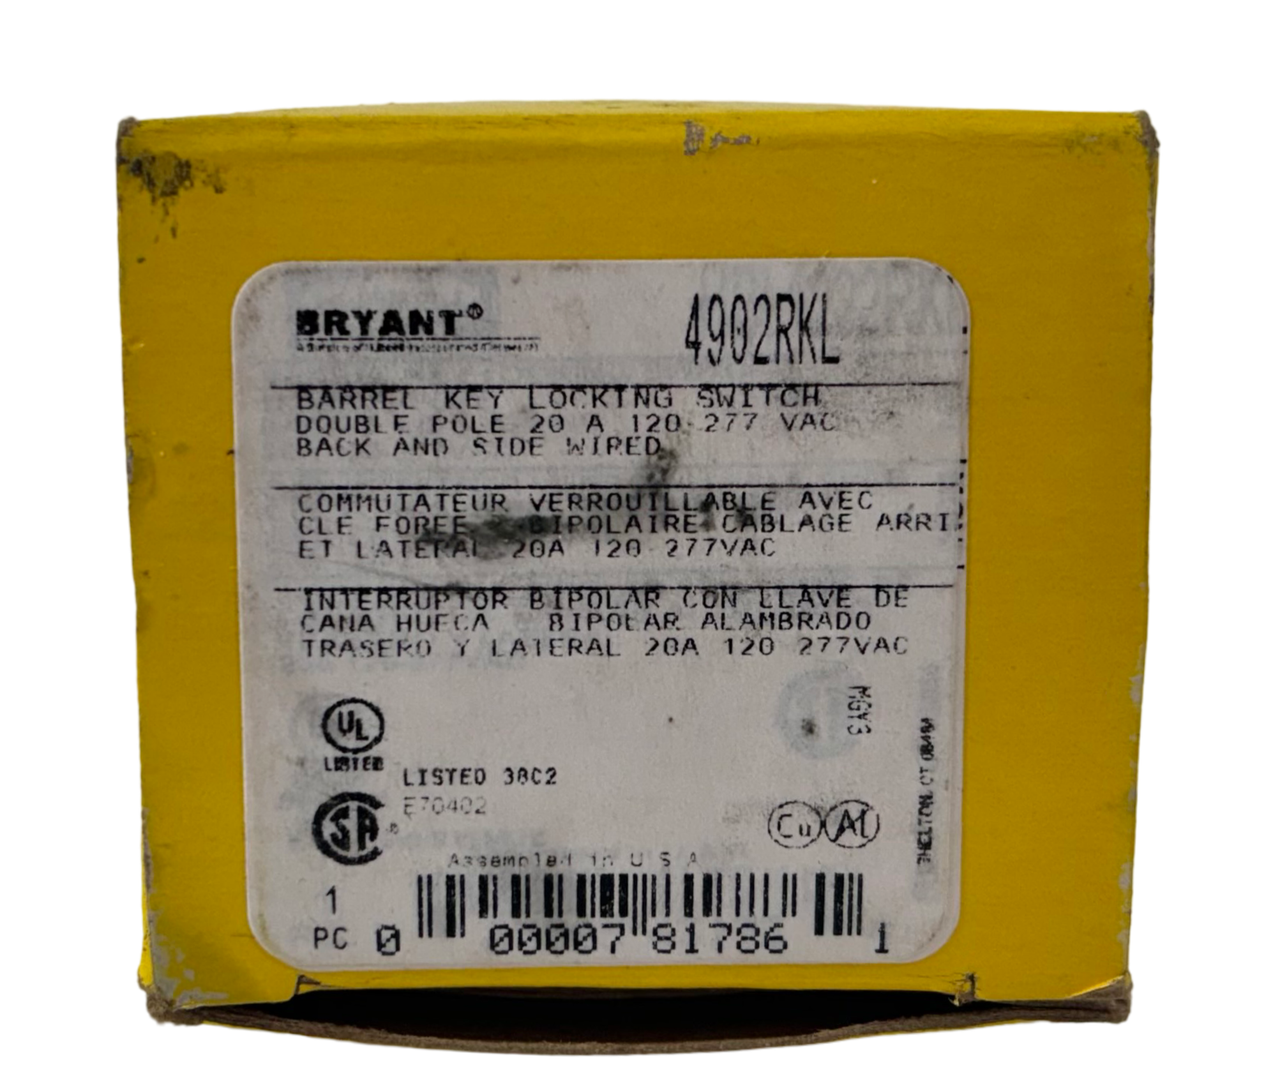 Bryant 4902RKL Barrel Key Locking Switch 20A 120/277V 2P Back and Side Wired